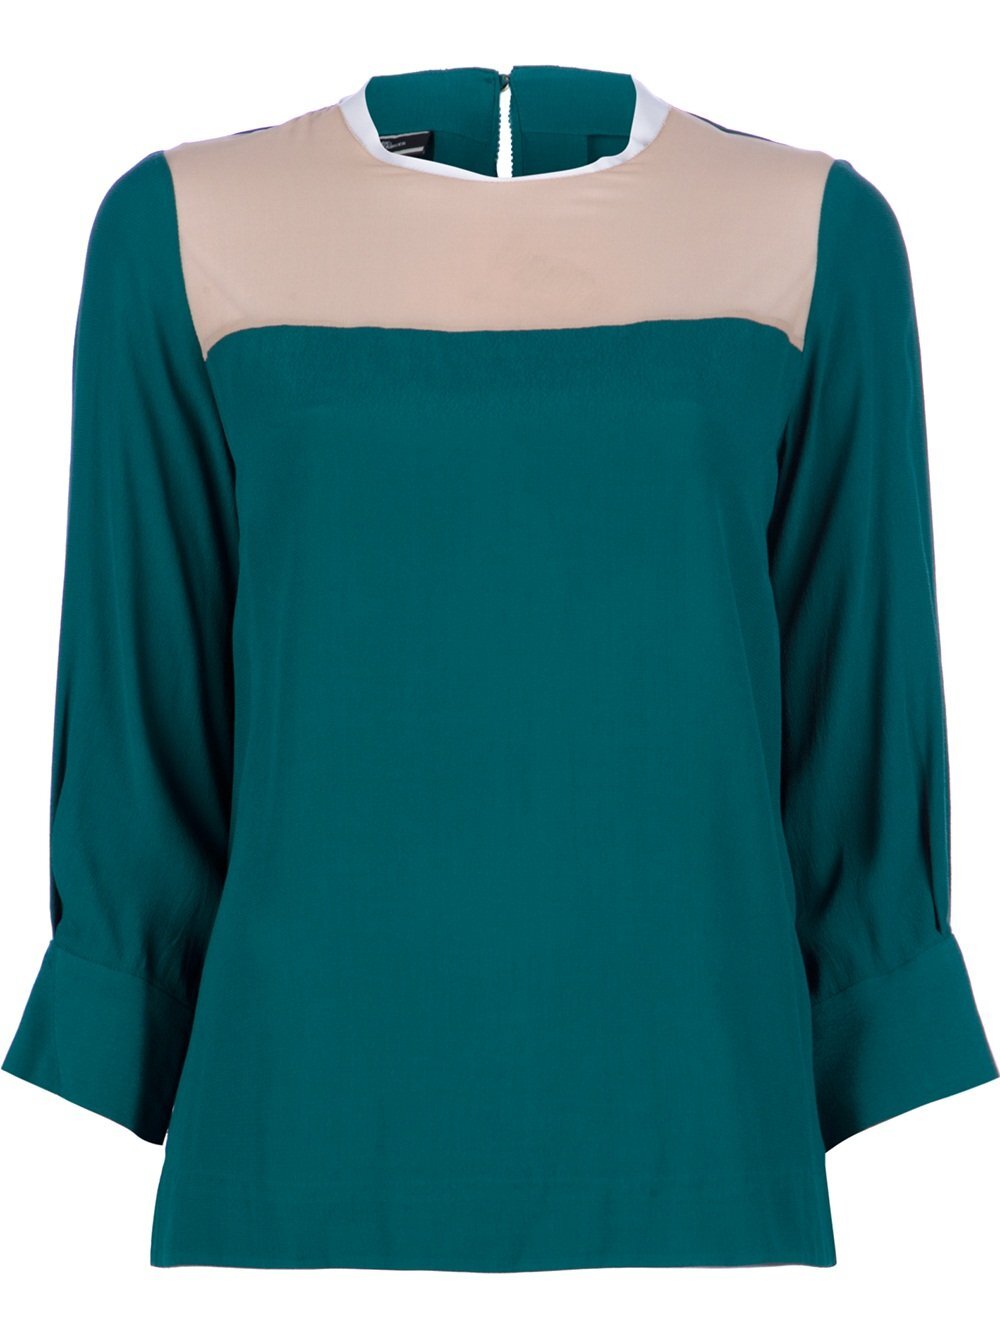 by-malene-birger-green-rasoria-blouse-product-1-11084168-843311360.jpeg